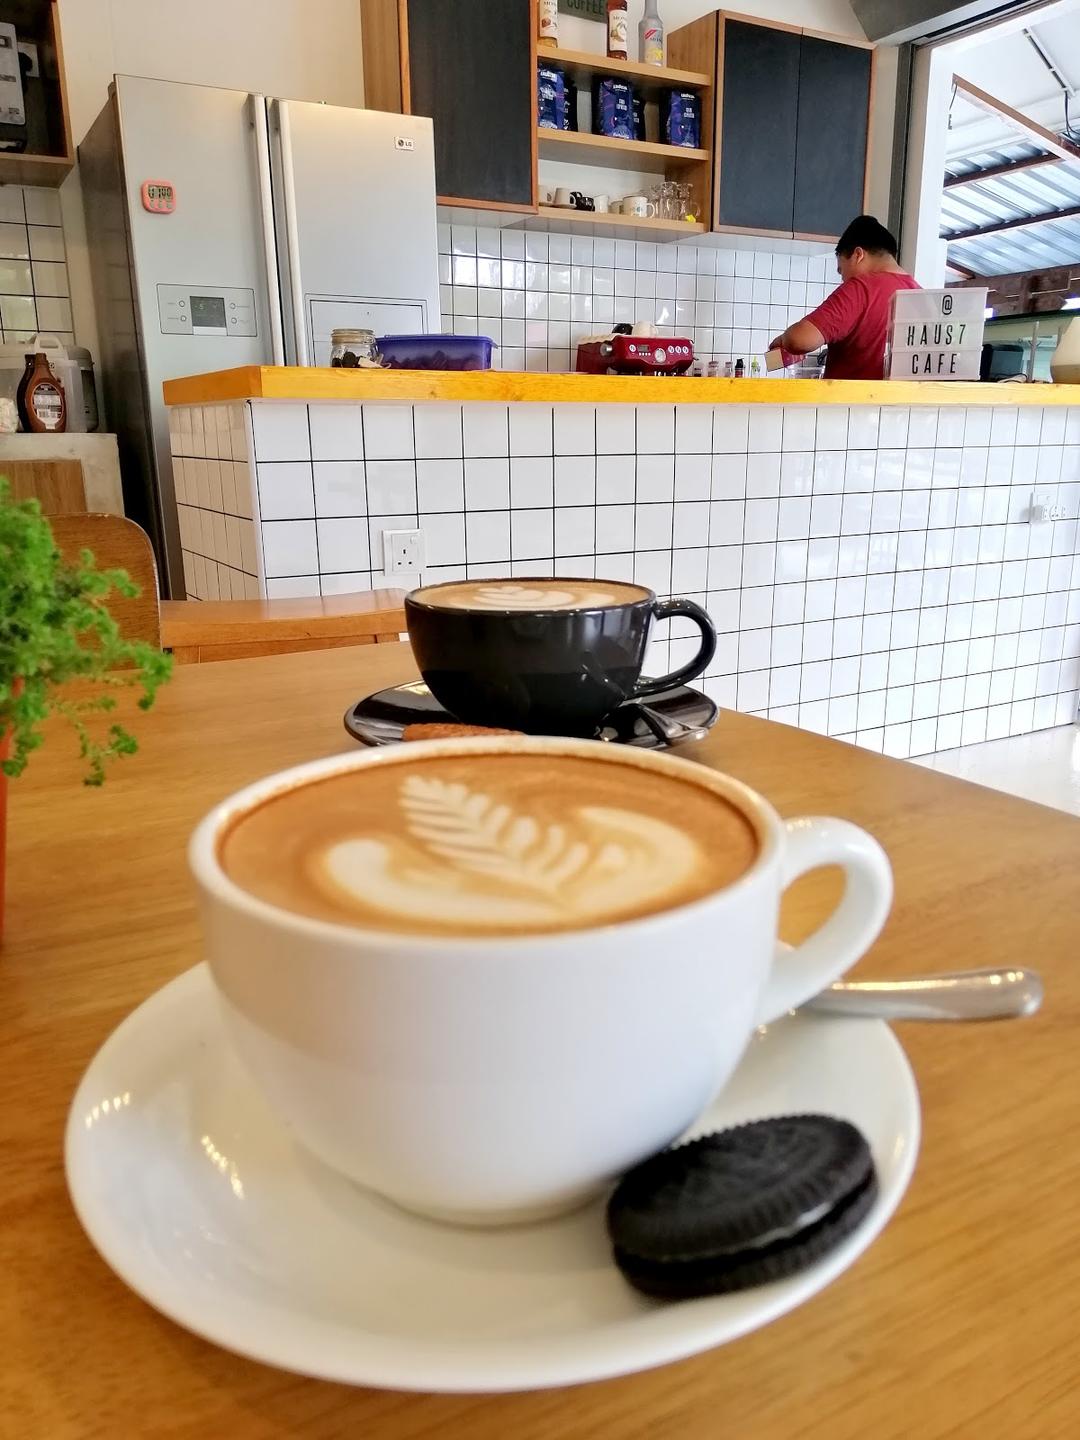 Photo of Haus 7 Cafe - Puchong, Selangor, Malaysia